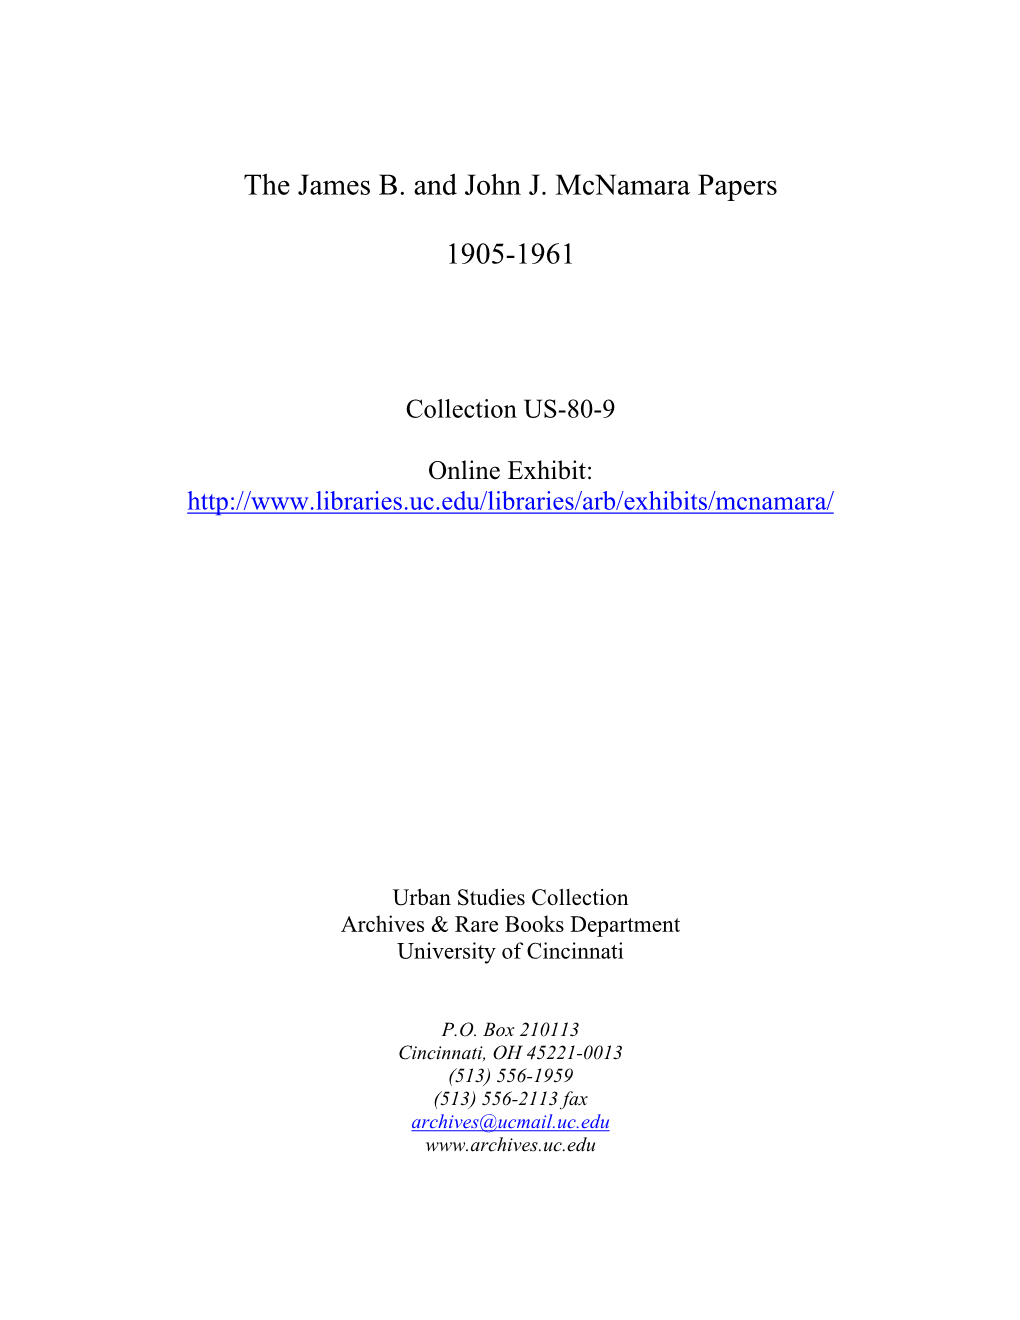 The James B. and John J. Mcnamara Papers 1905-1961